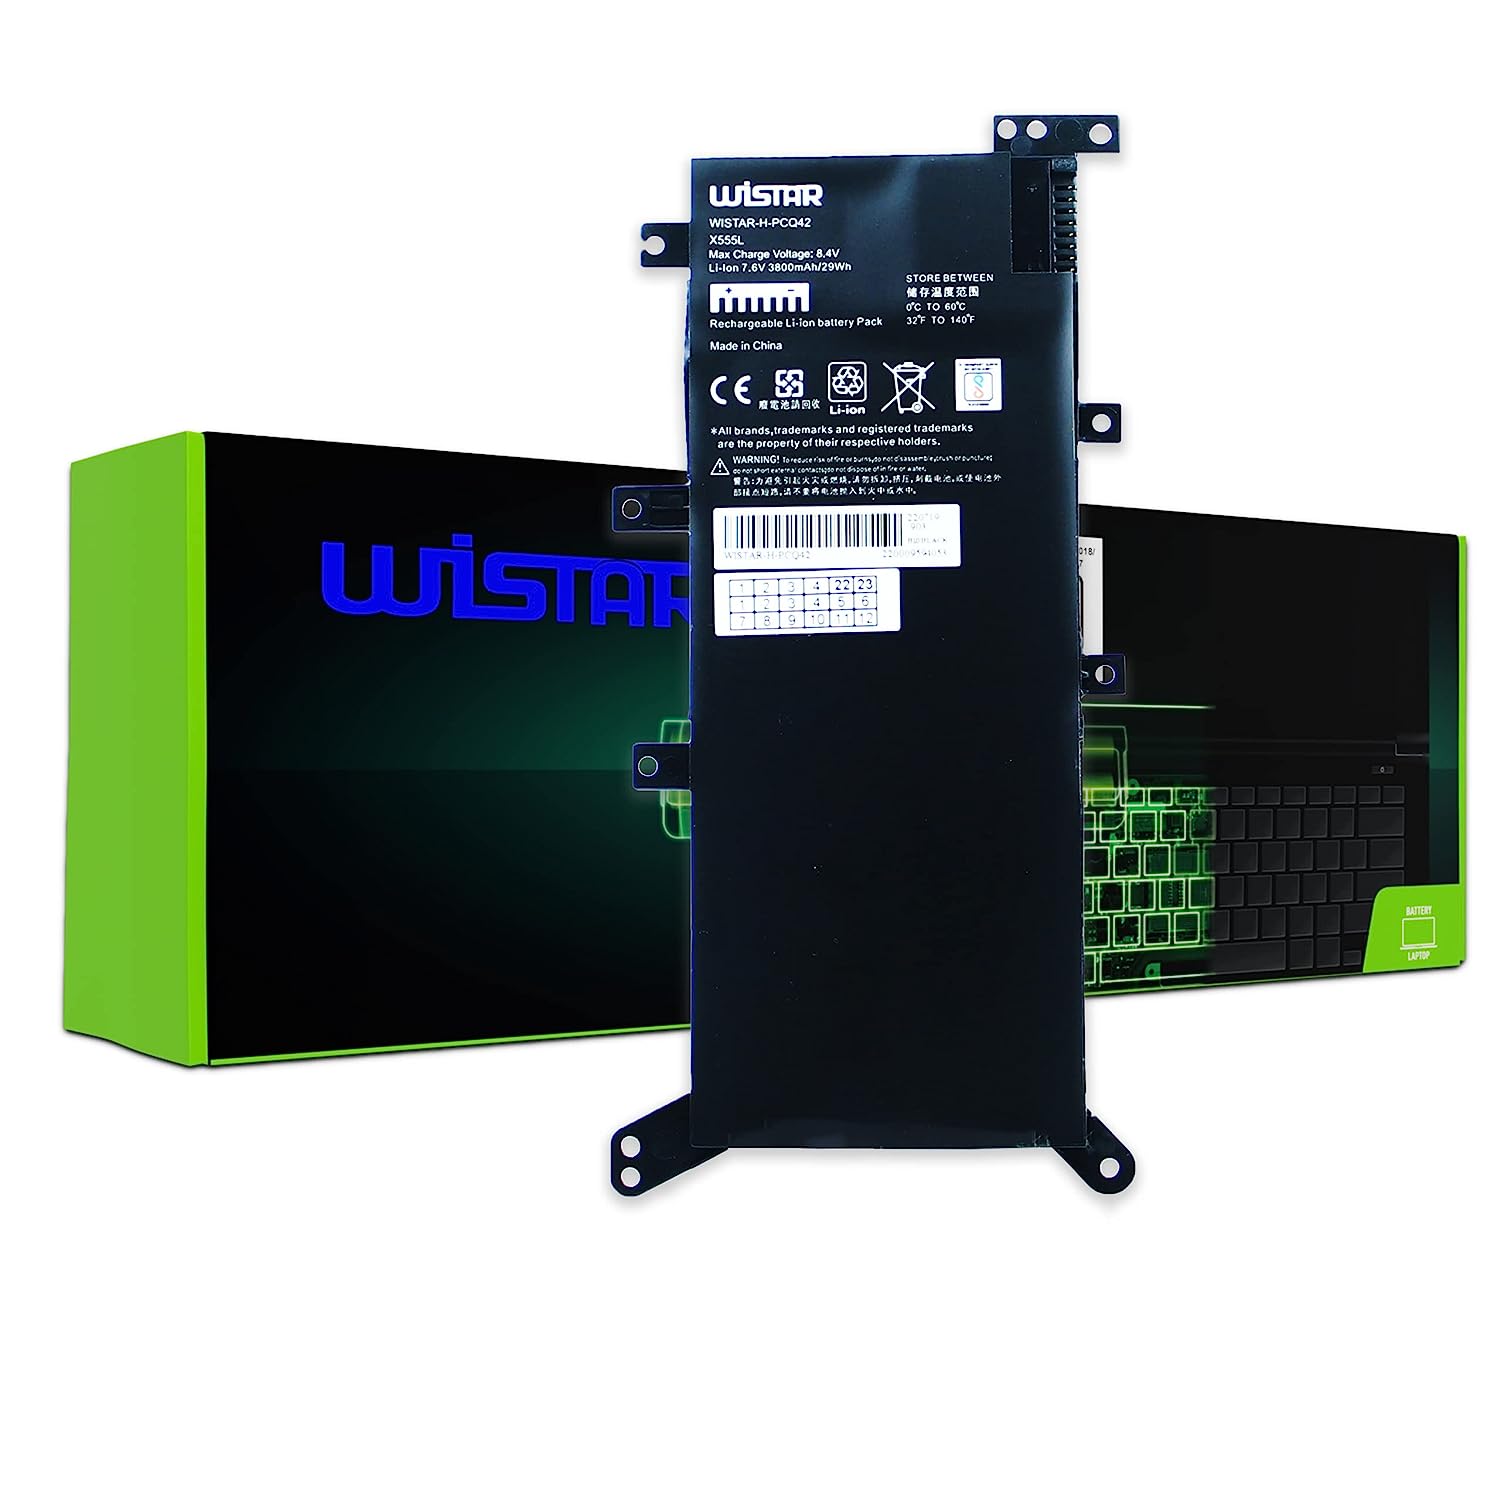 WISTAR C21N1347 X555L Laptop Battery for Asus X555LA X555 X555LD X555LN A555L K555L Y583LD W519LD K555LD K555LA R556L VM590L Series 2ICP4/63/134